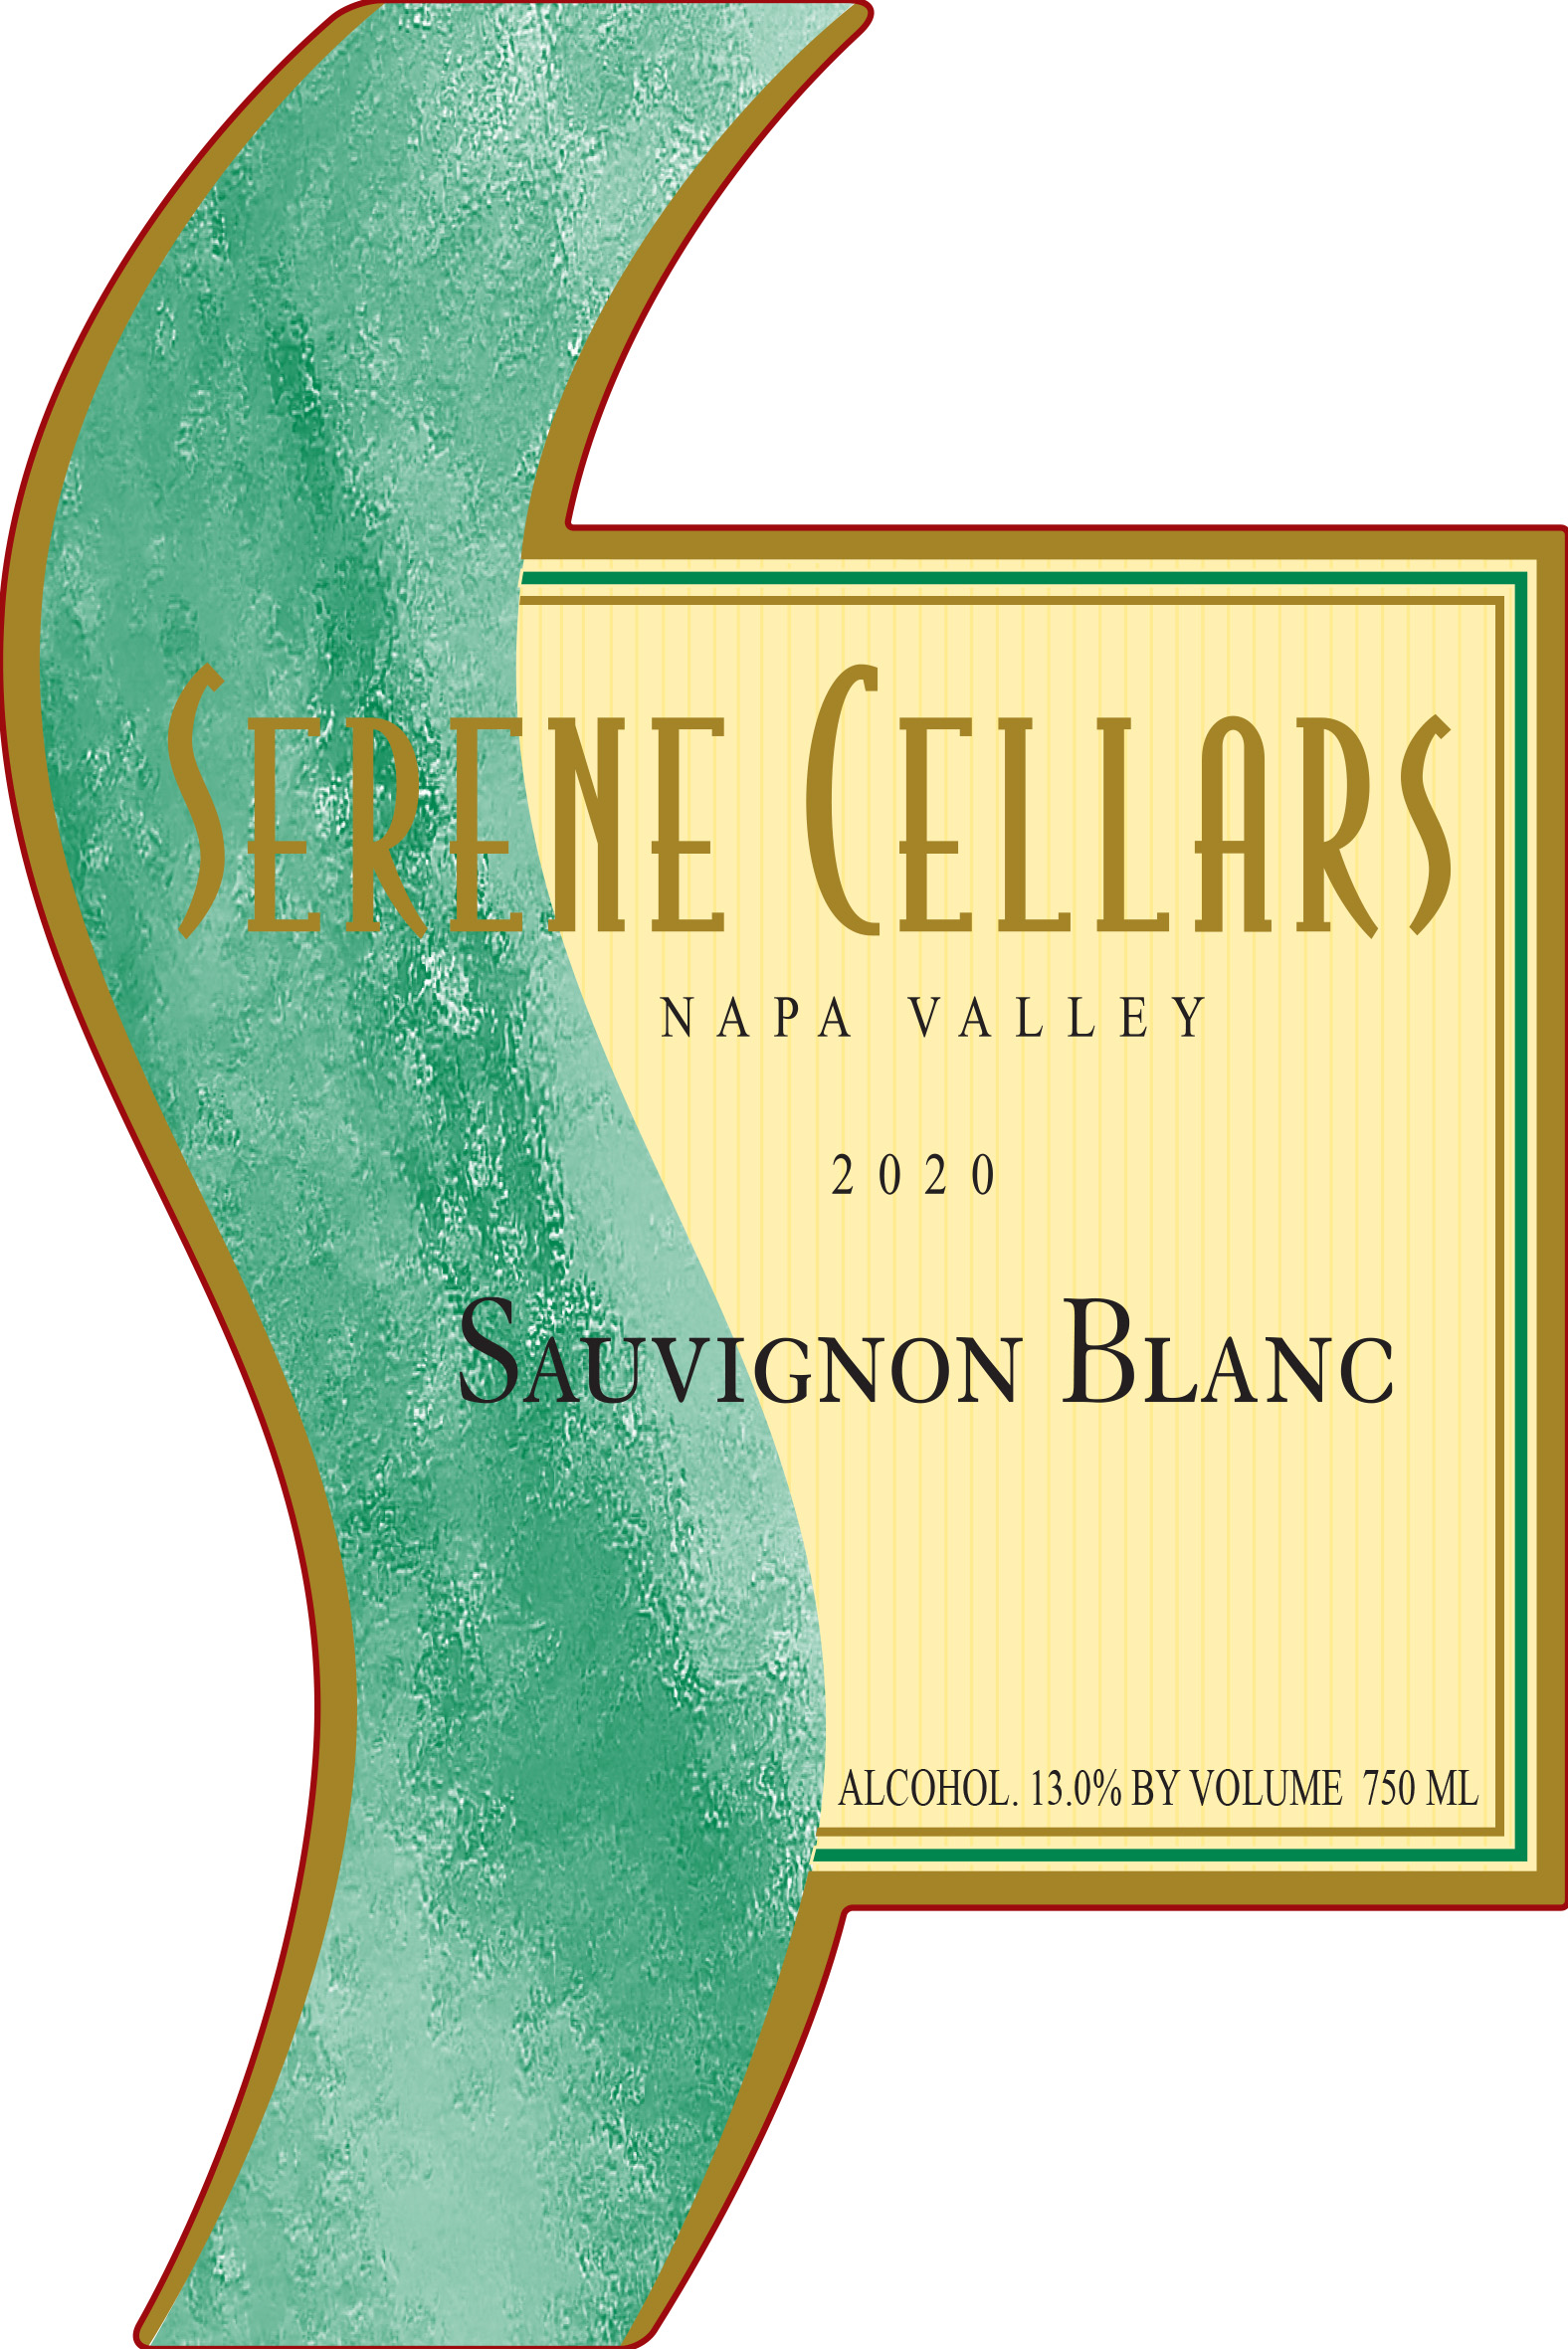 Product Image for 2020 Napa Valley Sauvignon Blanc "Saucy"